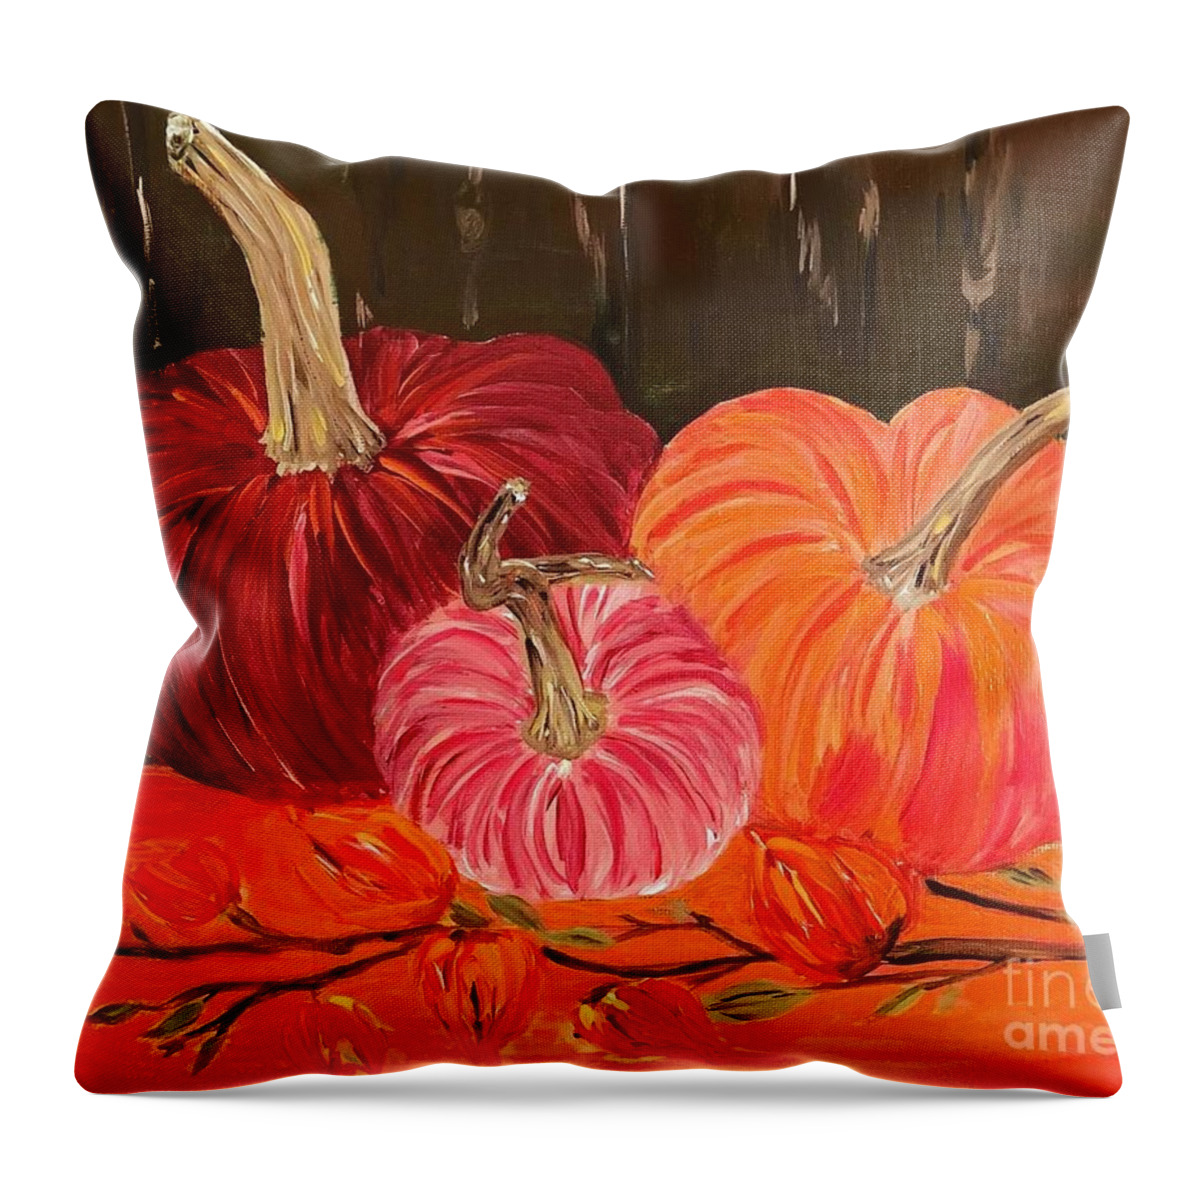  Throw Pillow featuring the painting Velvet Pumpkins by Debora Sanders